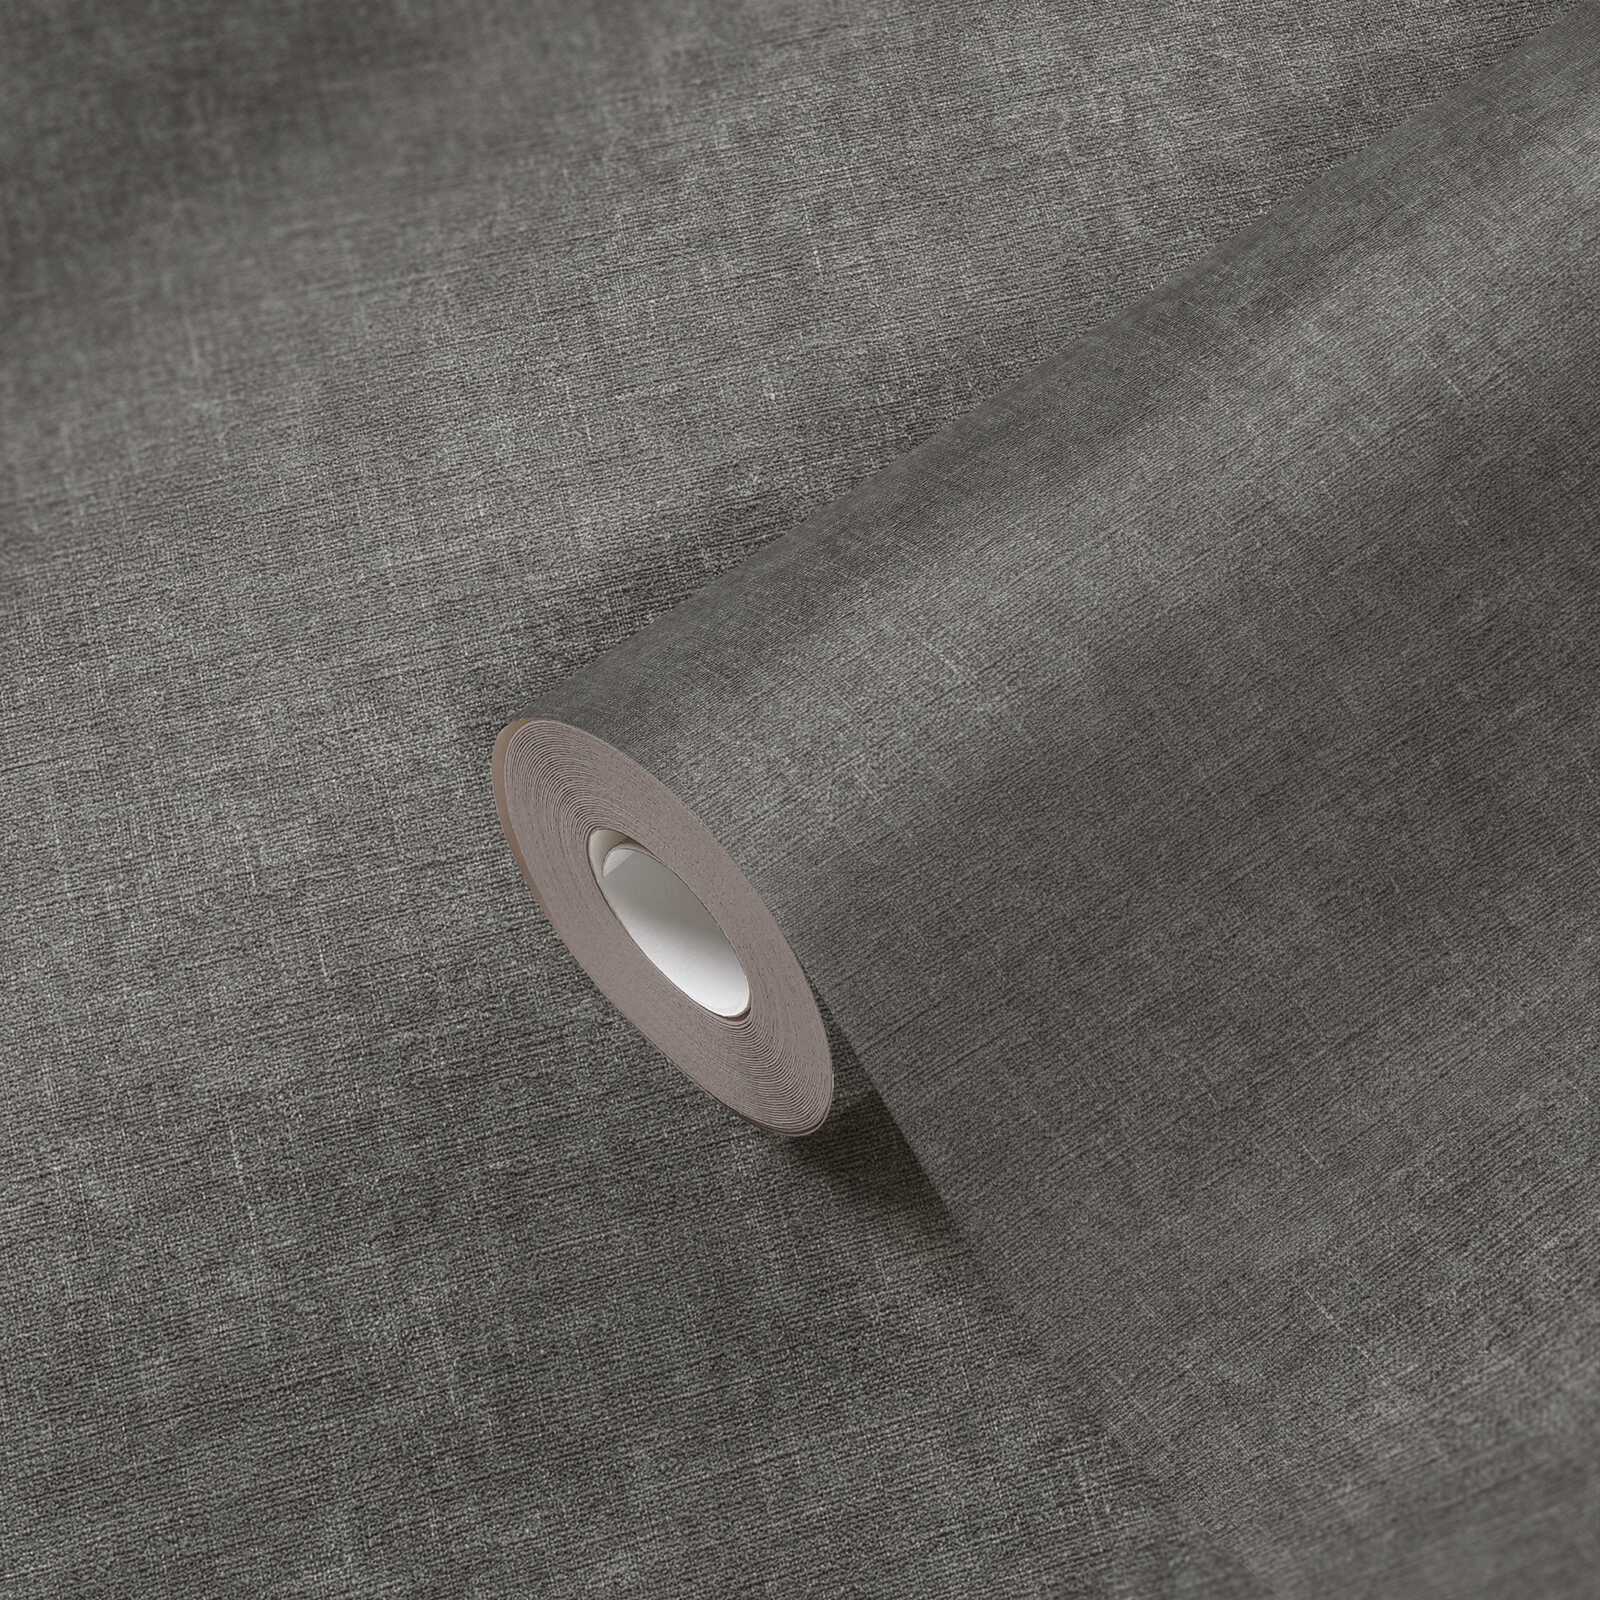             Papel pintado liso no tejido con aspecto de escayola - negro, gris
        